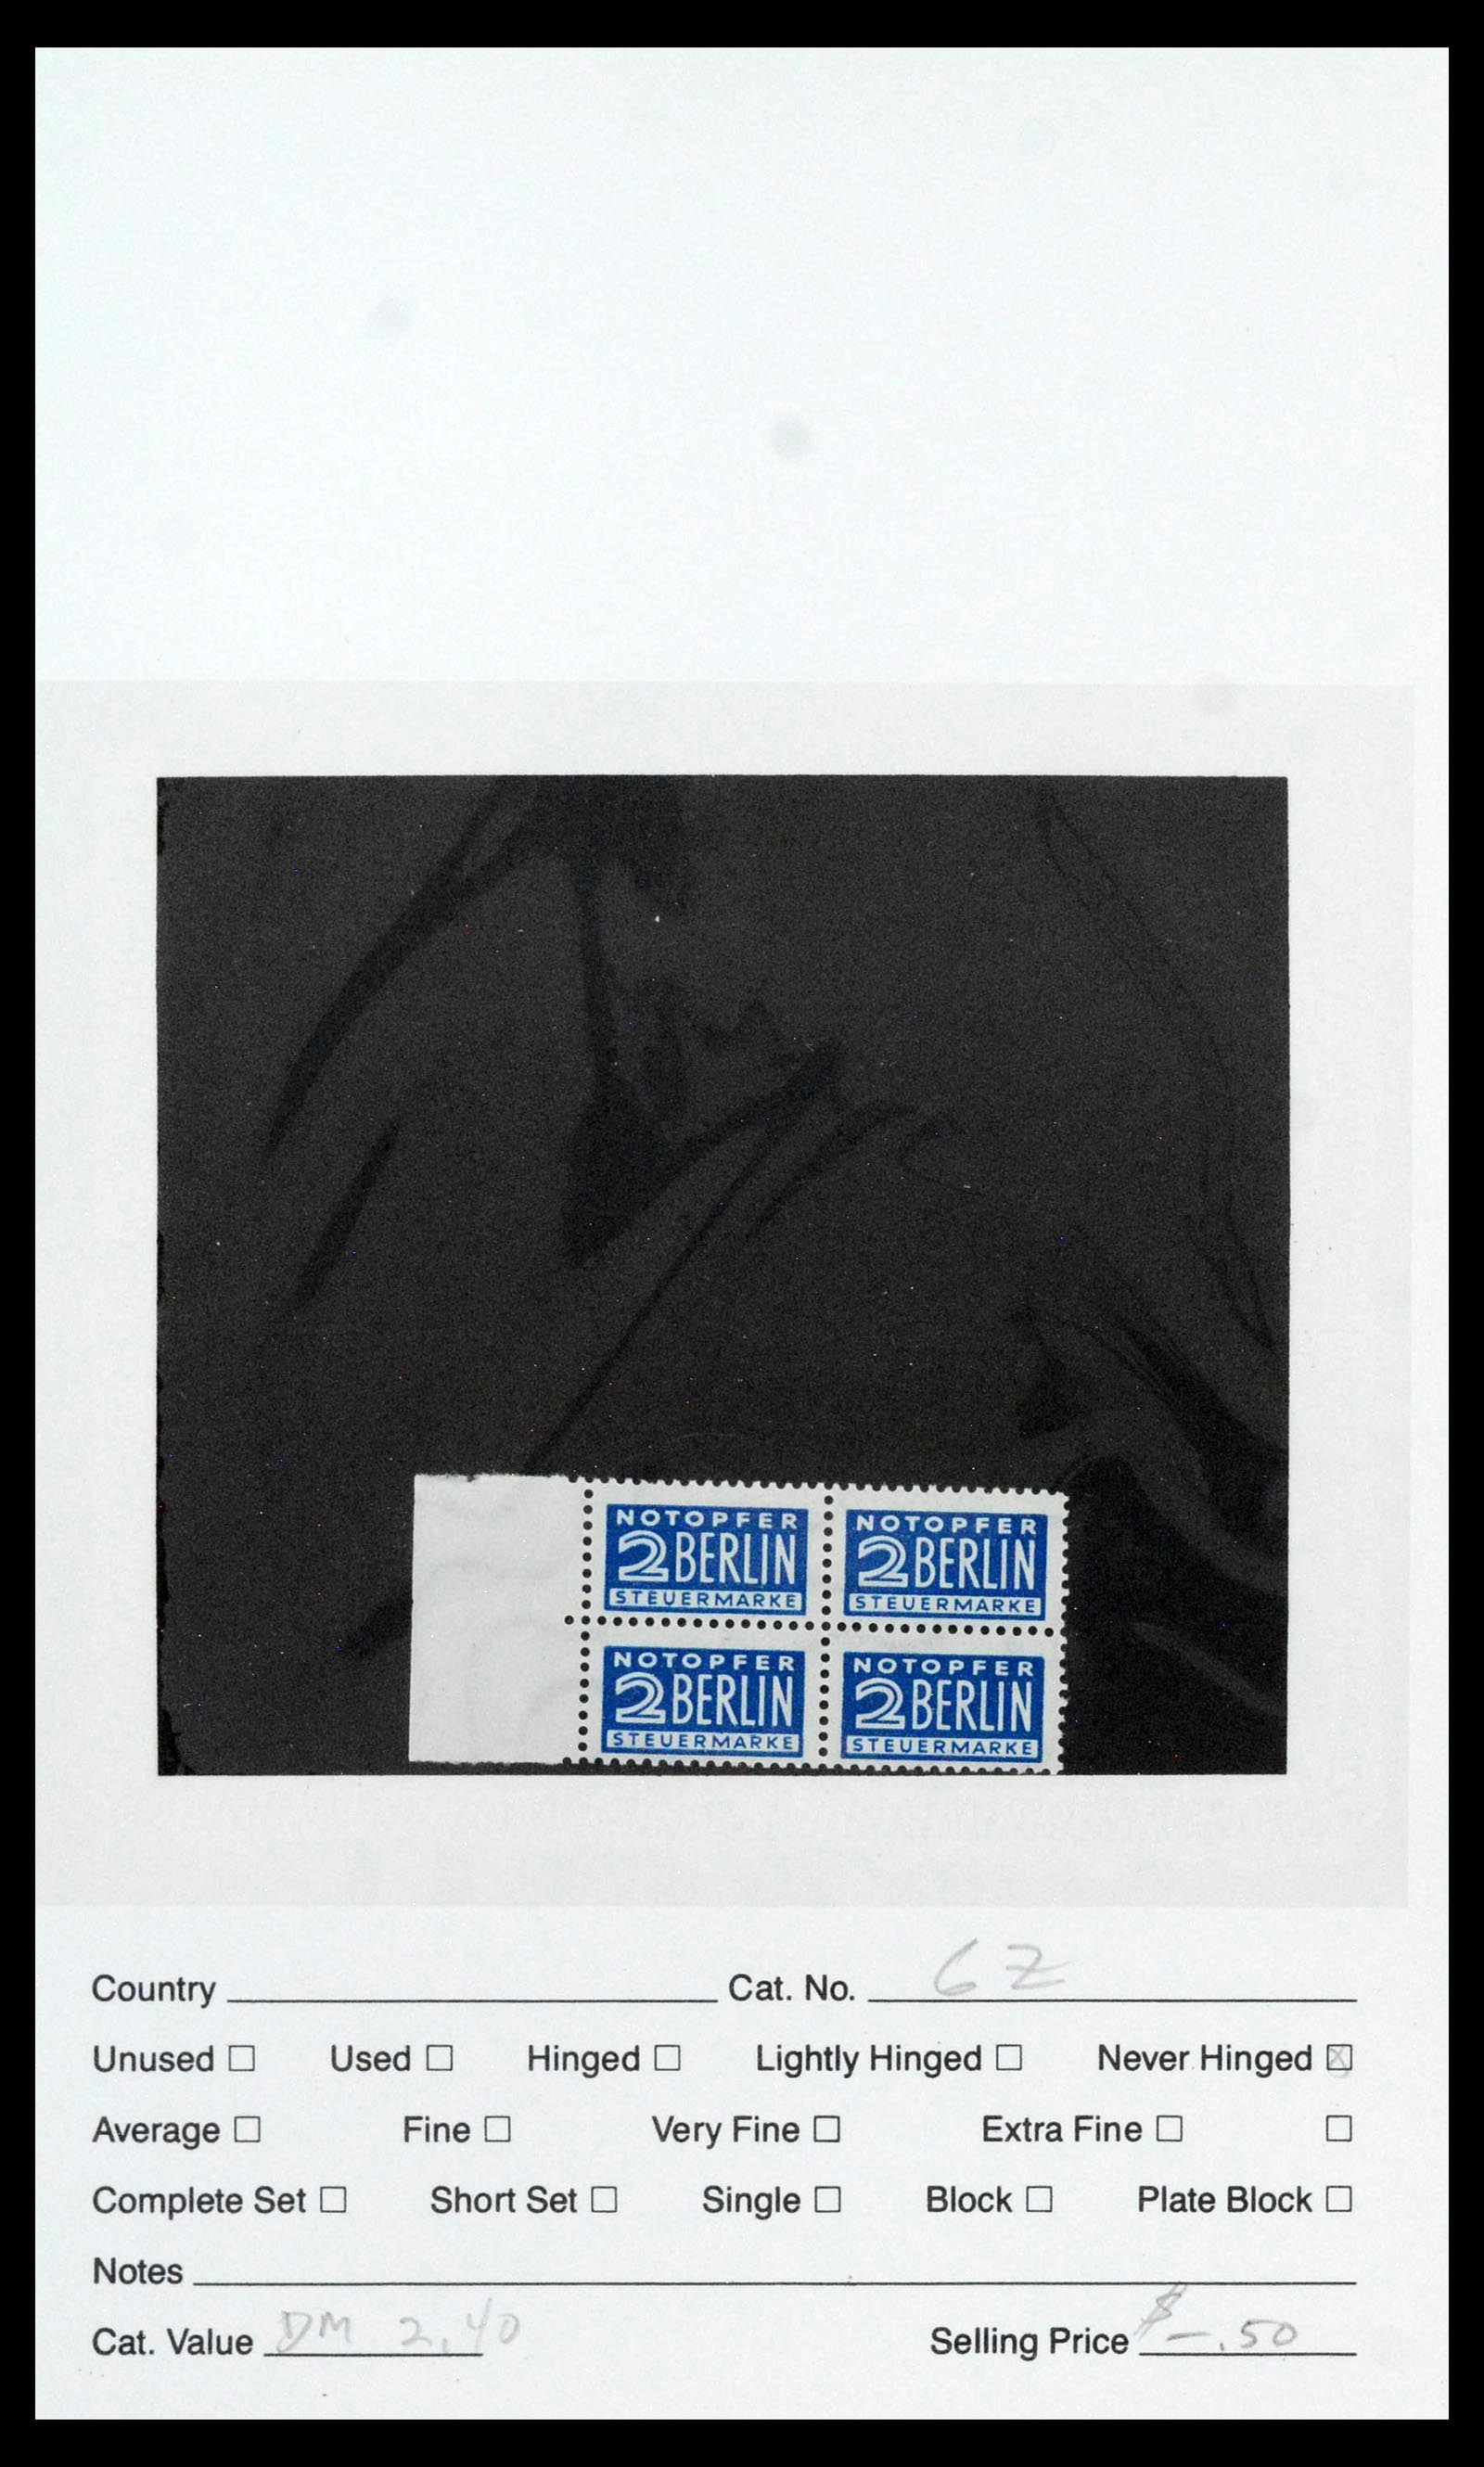 39459 0039 - Stamp collection 39459 Berlin notopfer 1948-1949.